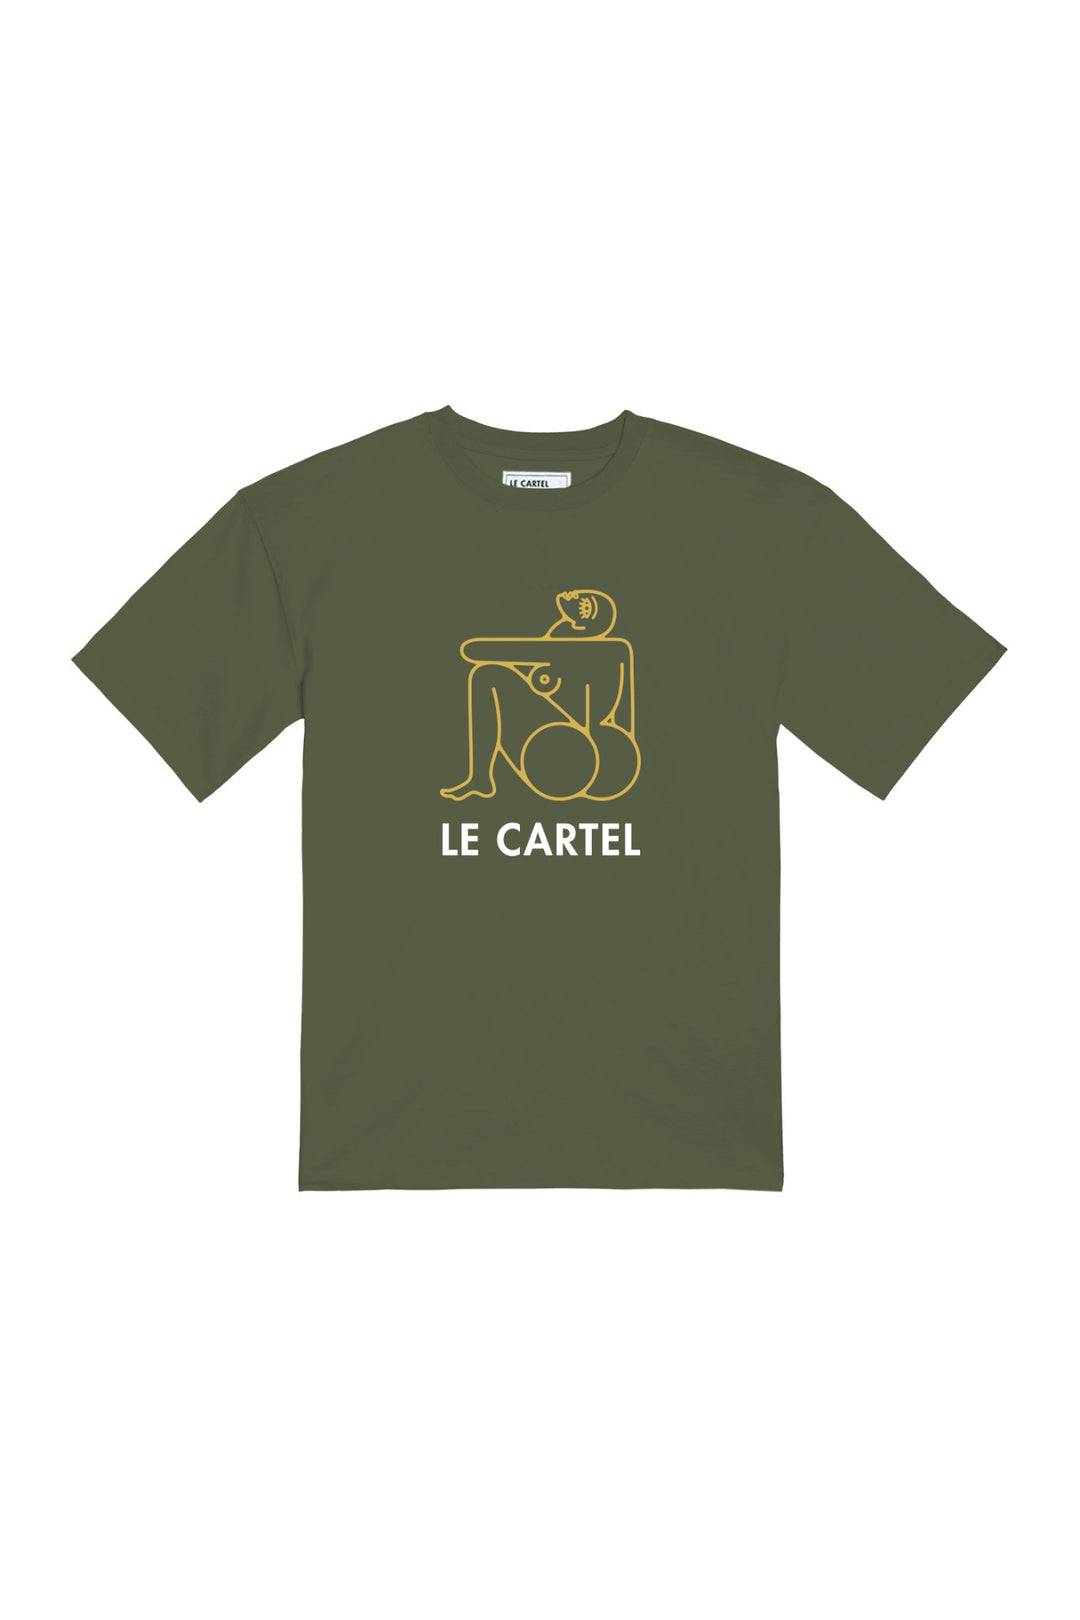 BOOTY CALL・T - shirt unisexe・Vert forêt - Le Cartel